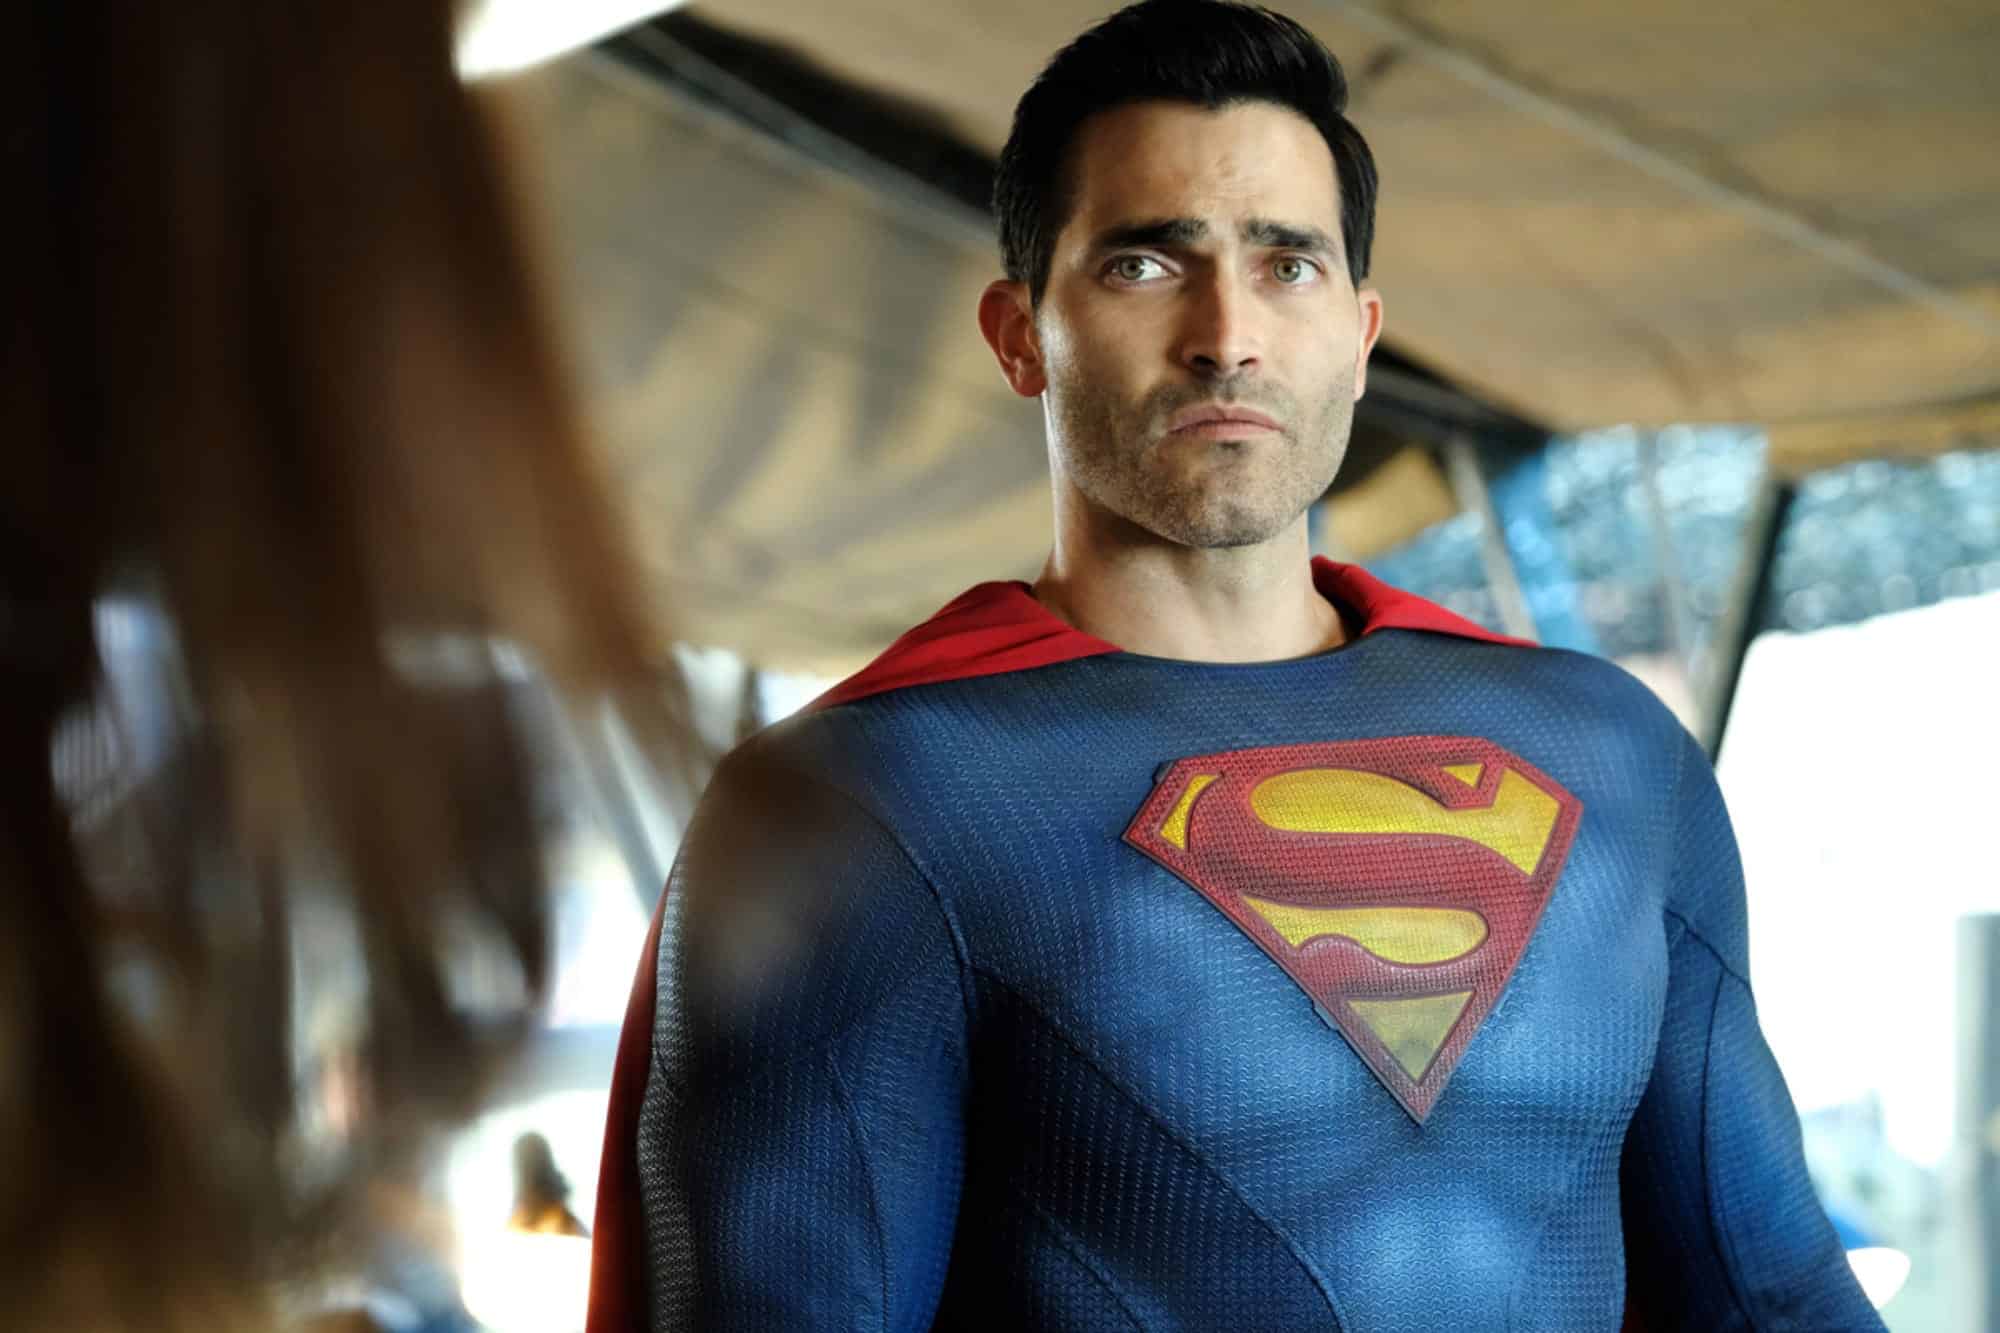 Superman and Lois Season 3 Episode 2 - Tyler Hoechlin as Kal-El, Clark Kent, Superman